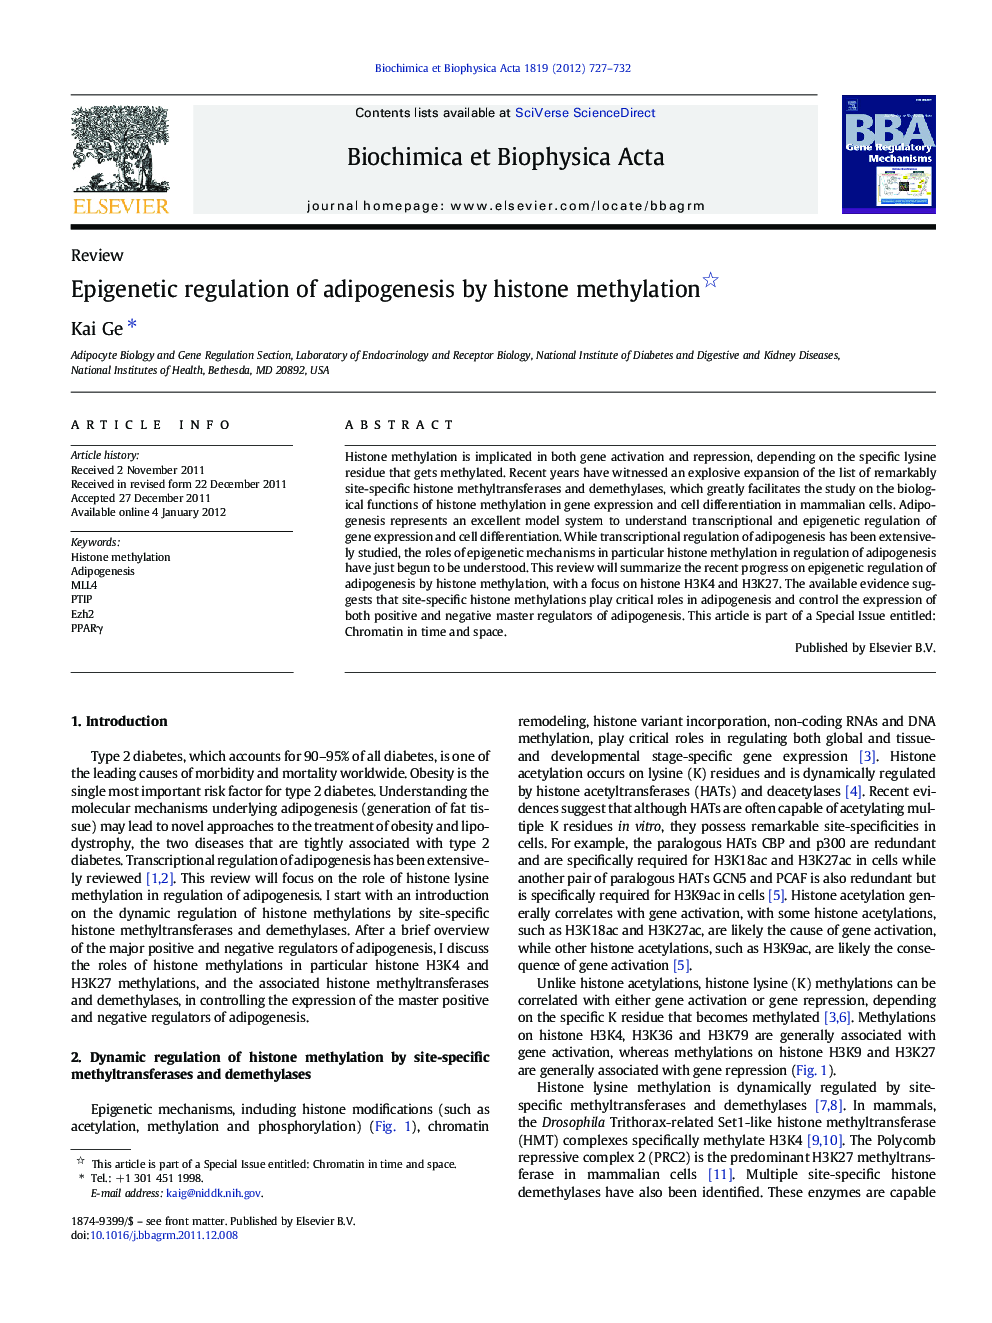 Epigenetic regulation of adipogenesis by histone methylation 